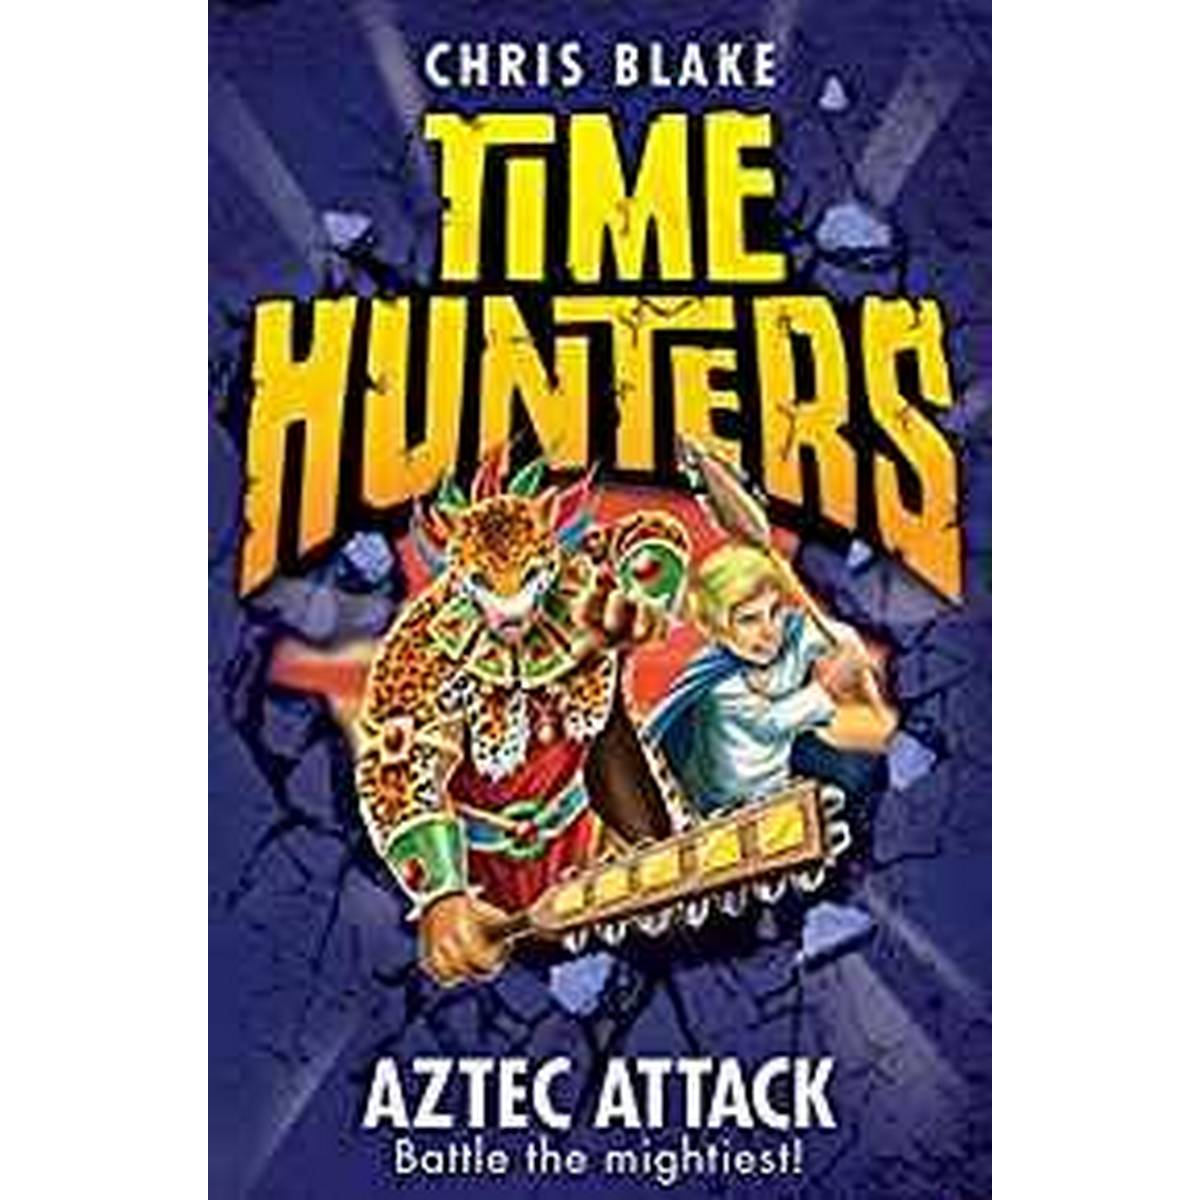 Time Hunters Aztec Attack No 12